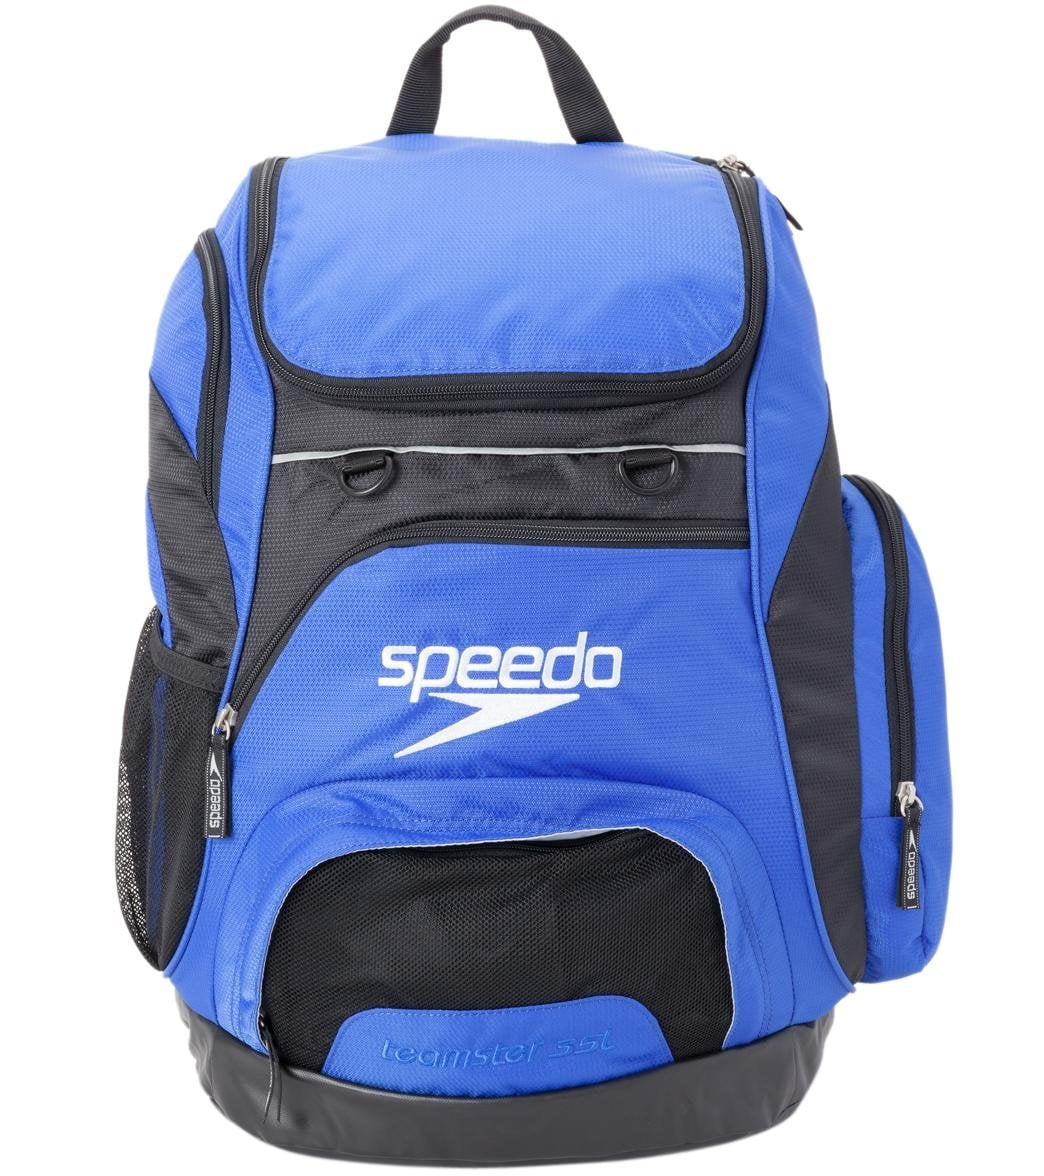 Speedo Teamster Backpack Swim Swimming Gear Back Pack Equipment Bag ...